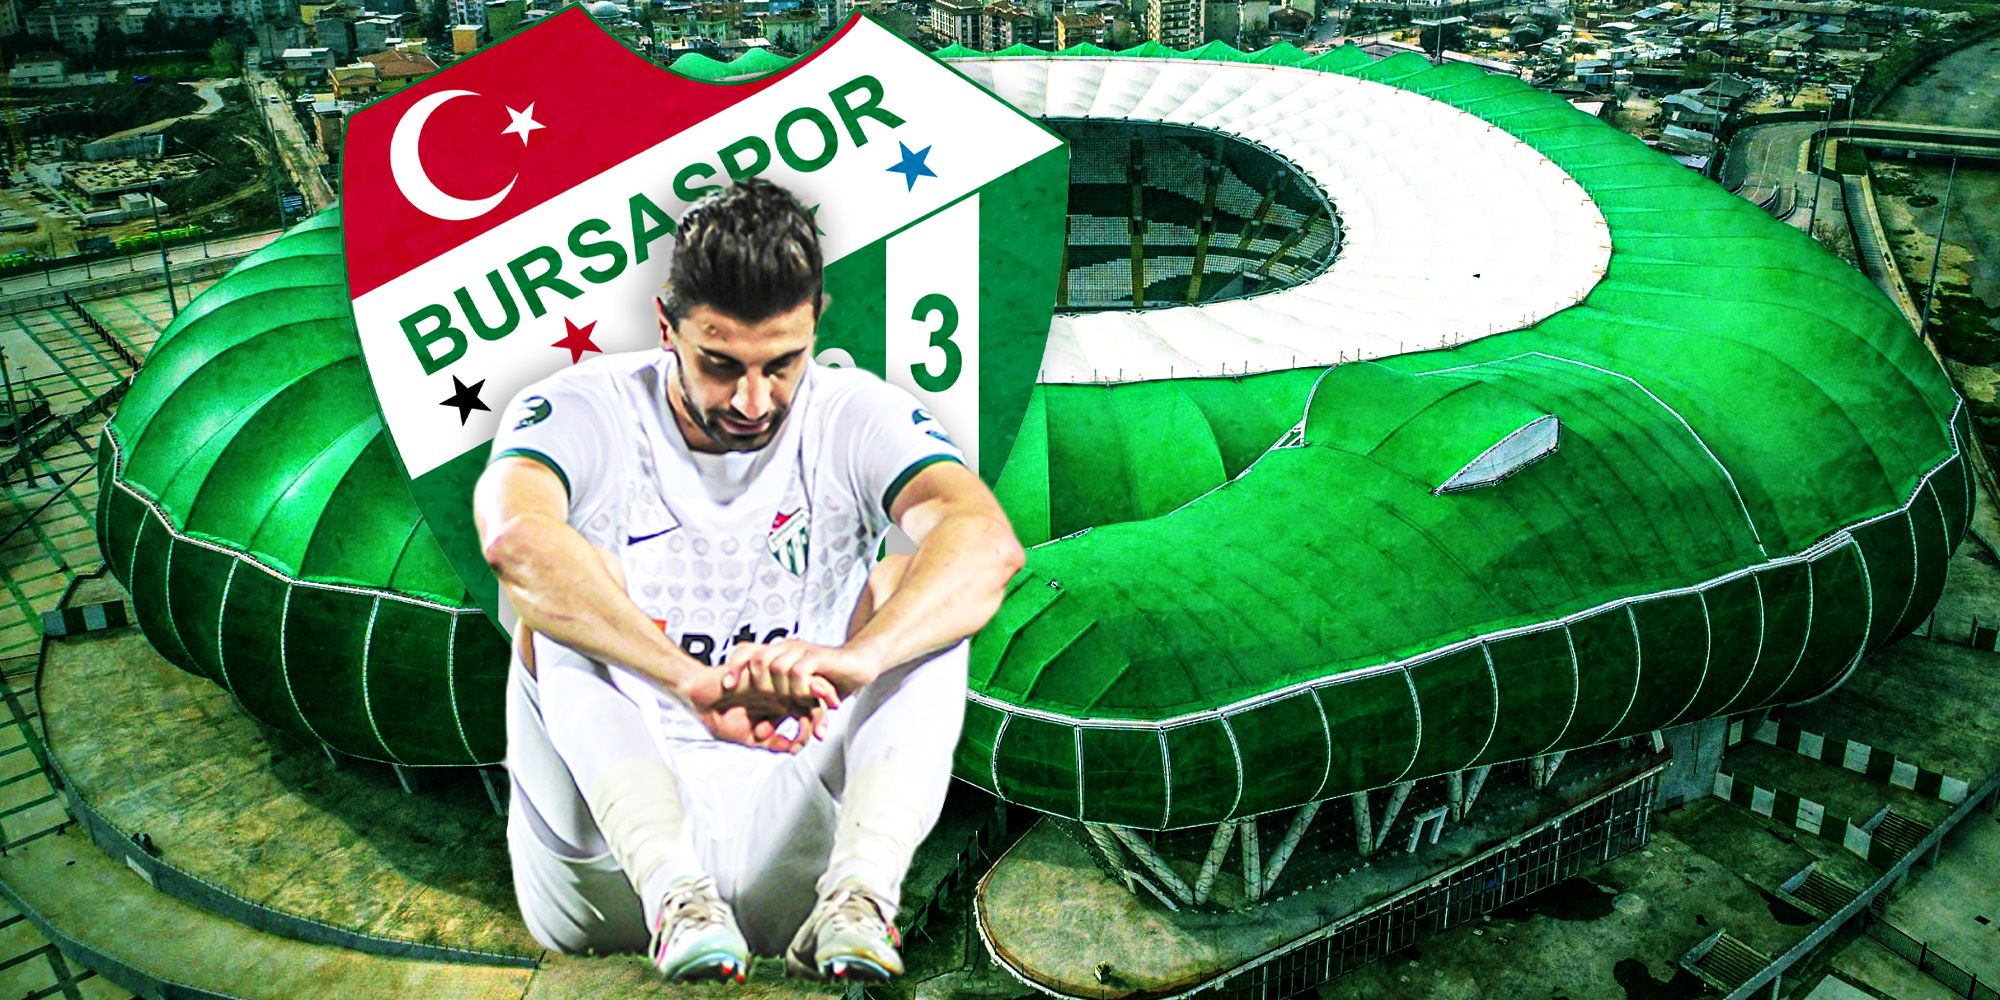 Image of Bursaspor crocodile stadium with club logo and a player looking sad